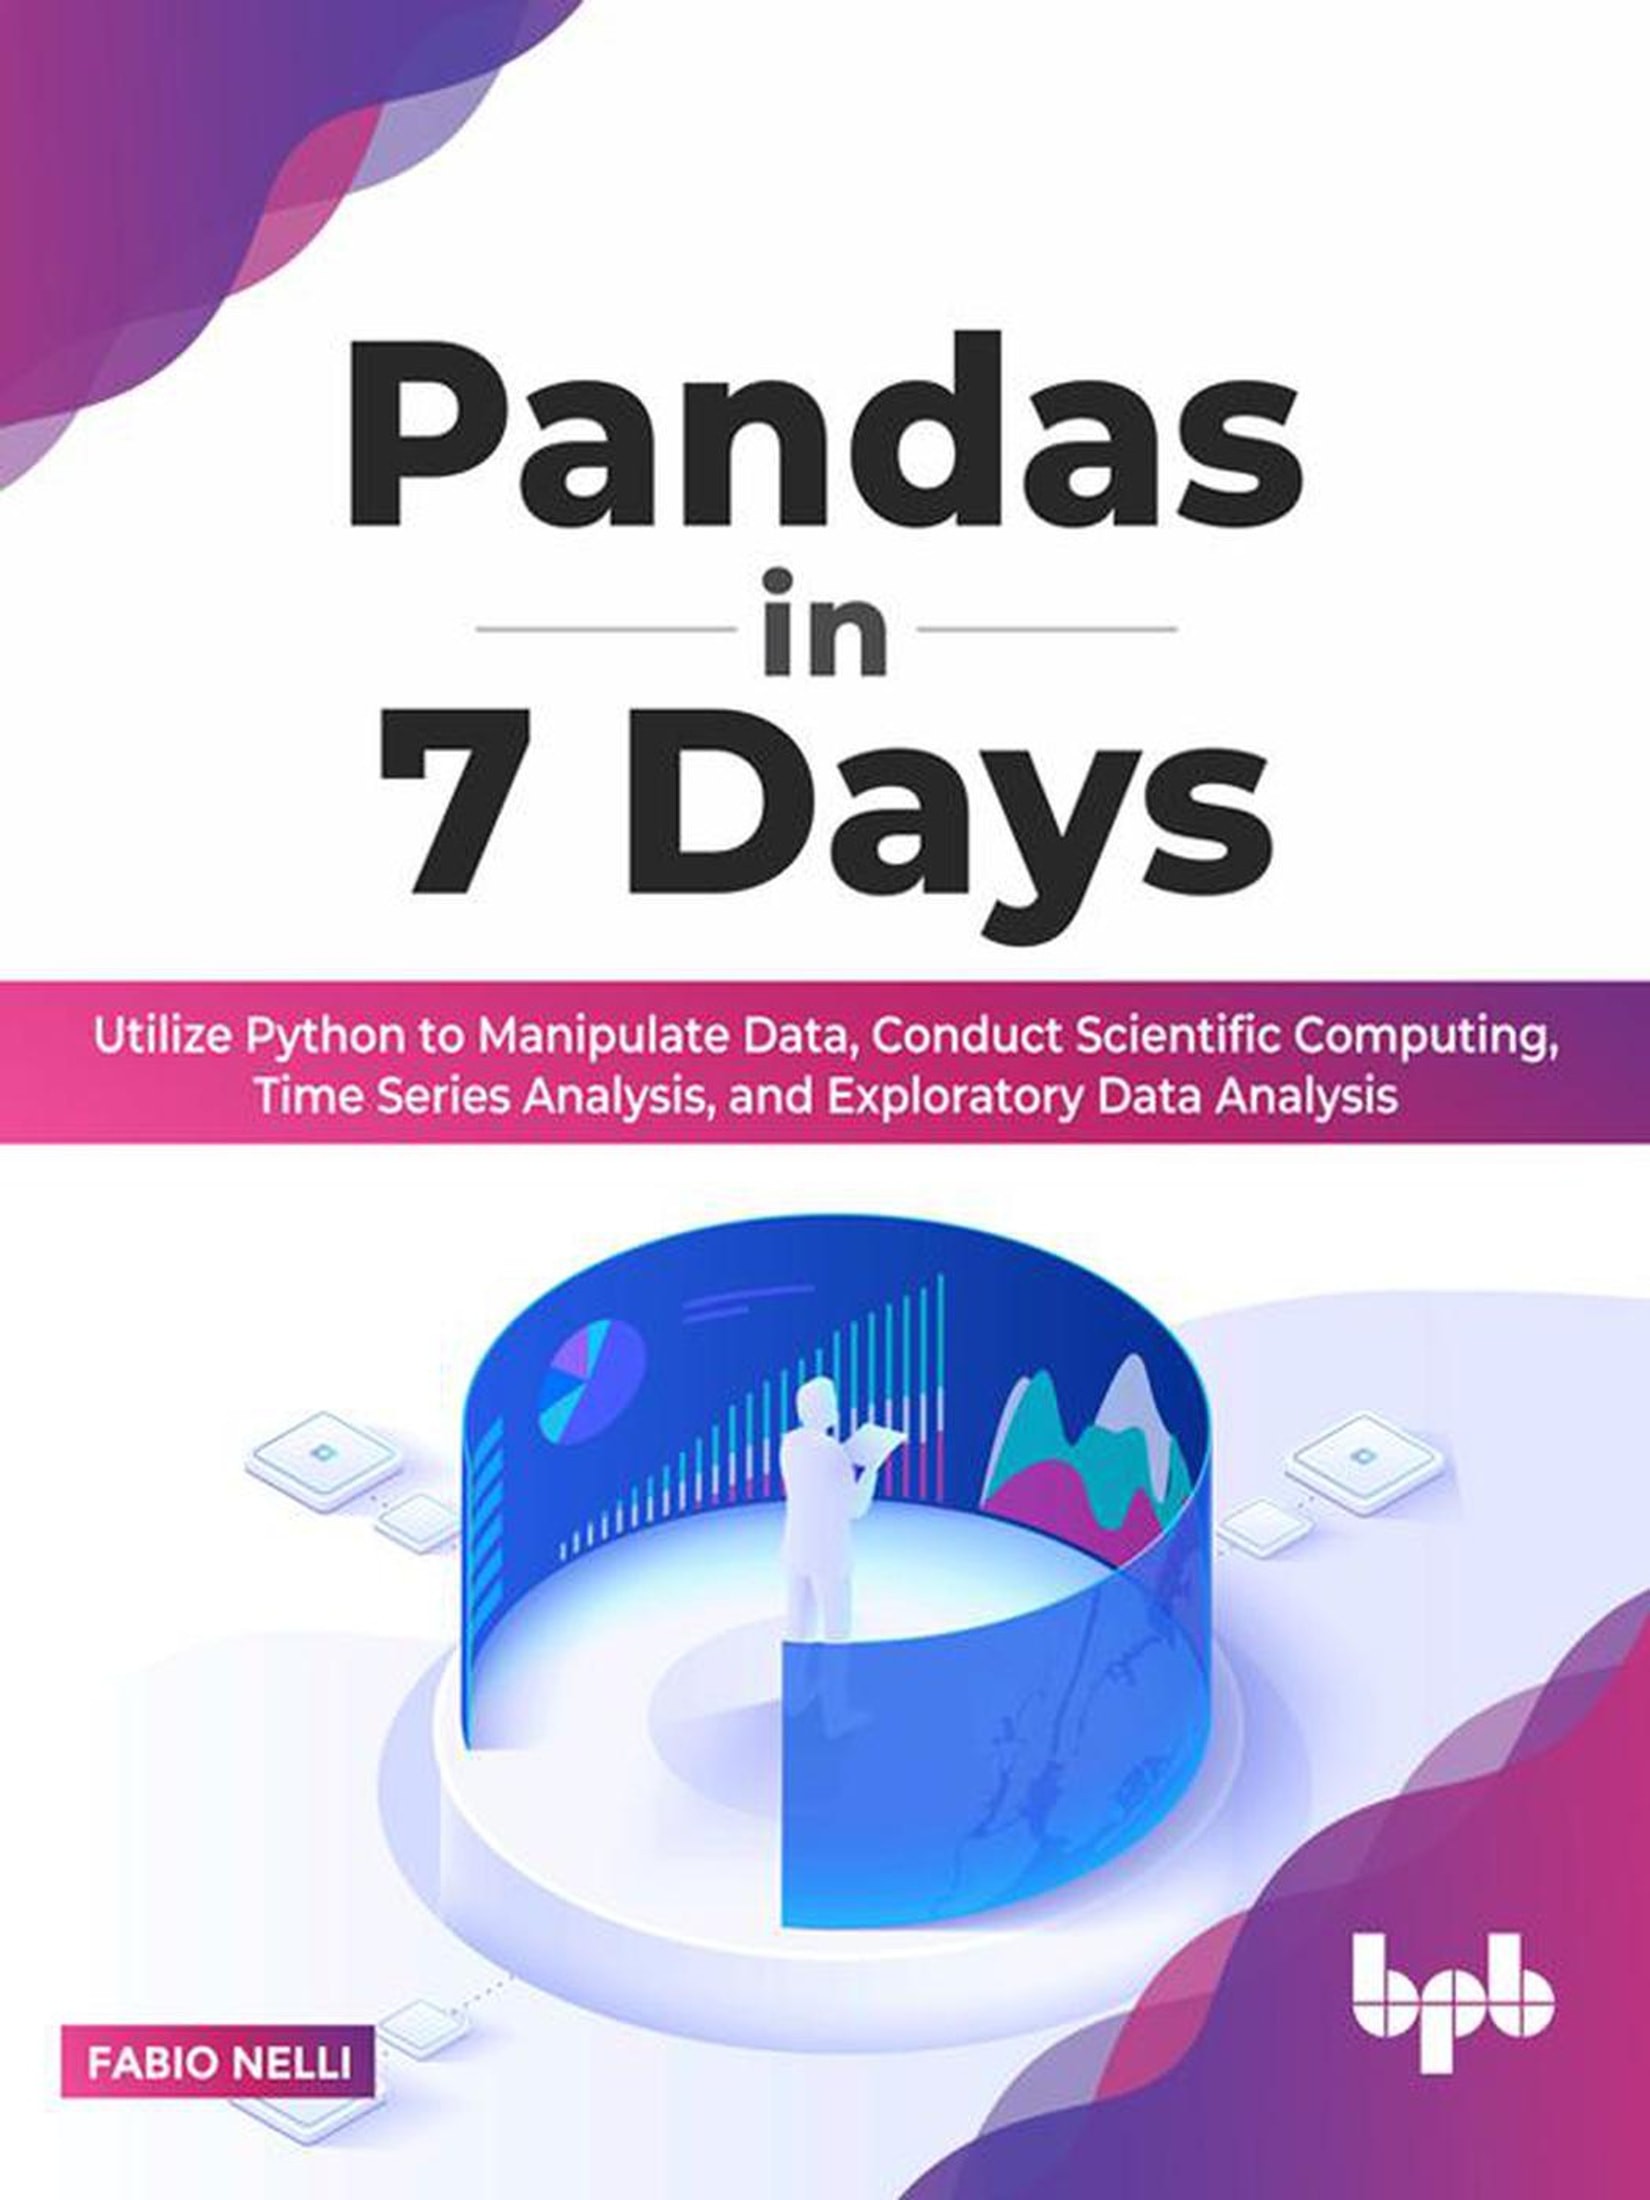 Pandas in 7 Days: Utilize Python to Manipulate Data, Conduct Scientific Computing, Time Series Analysis, and Exploratory Data Analysis